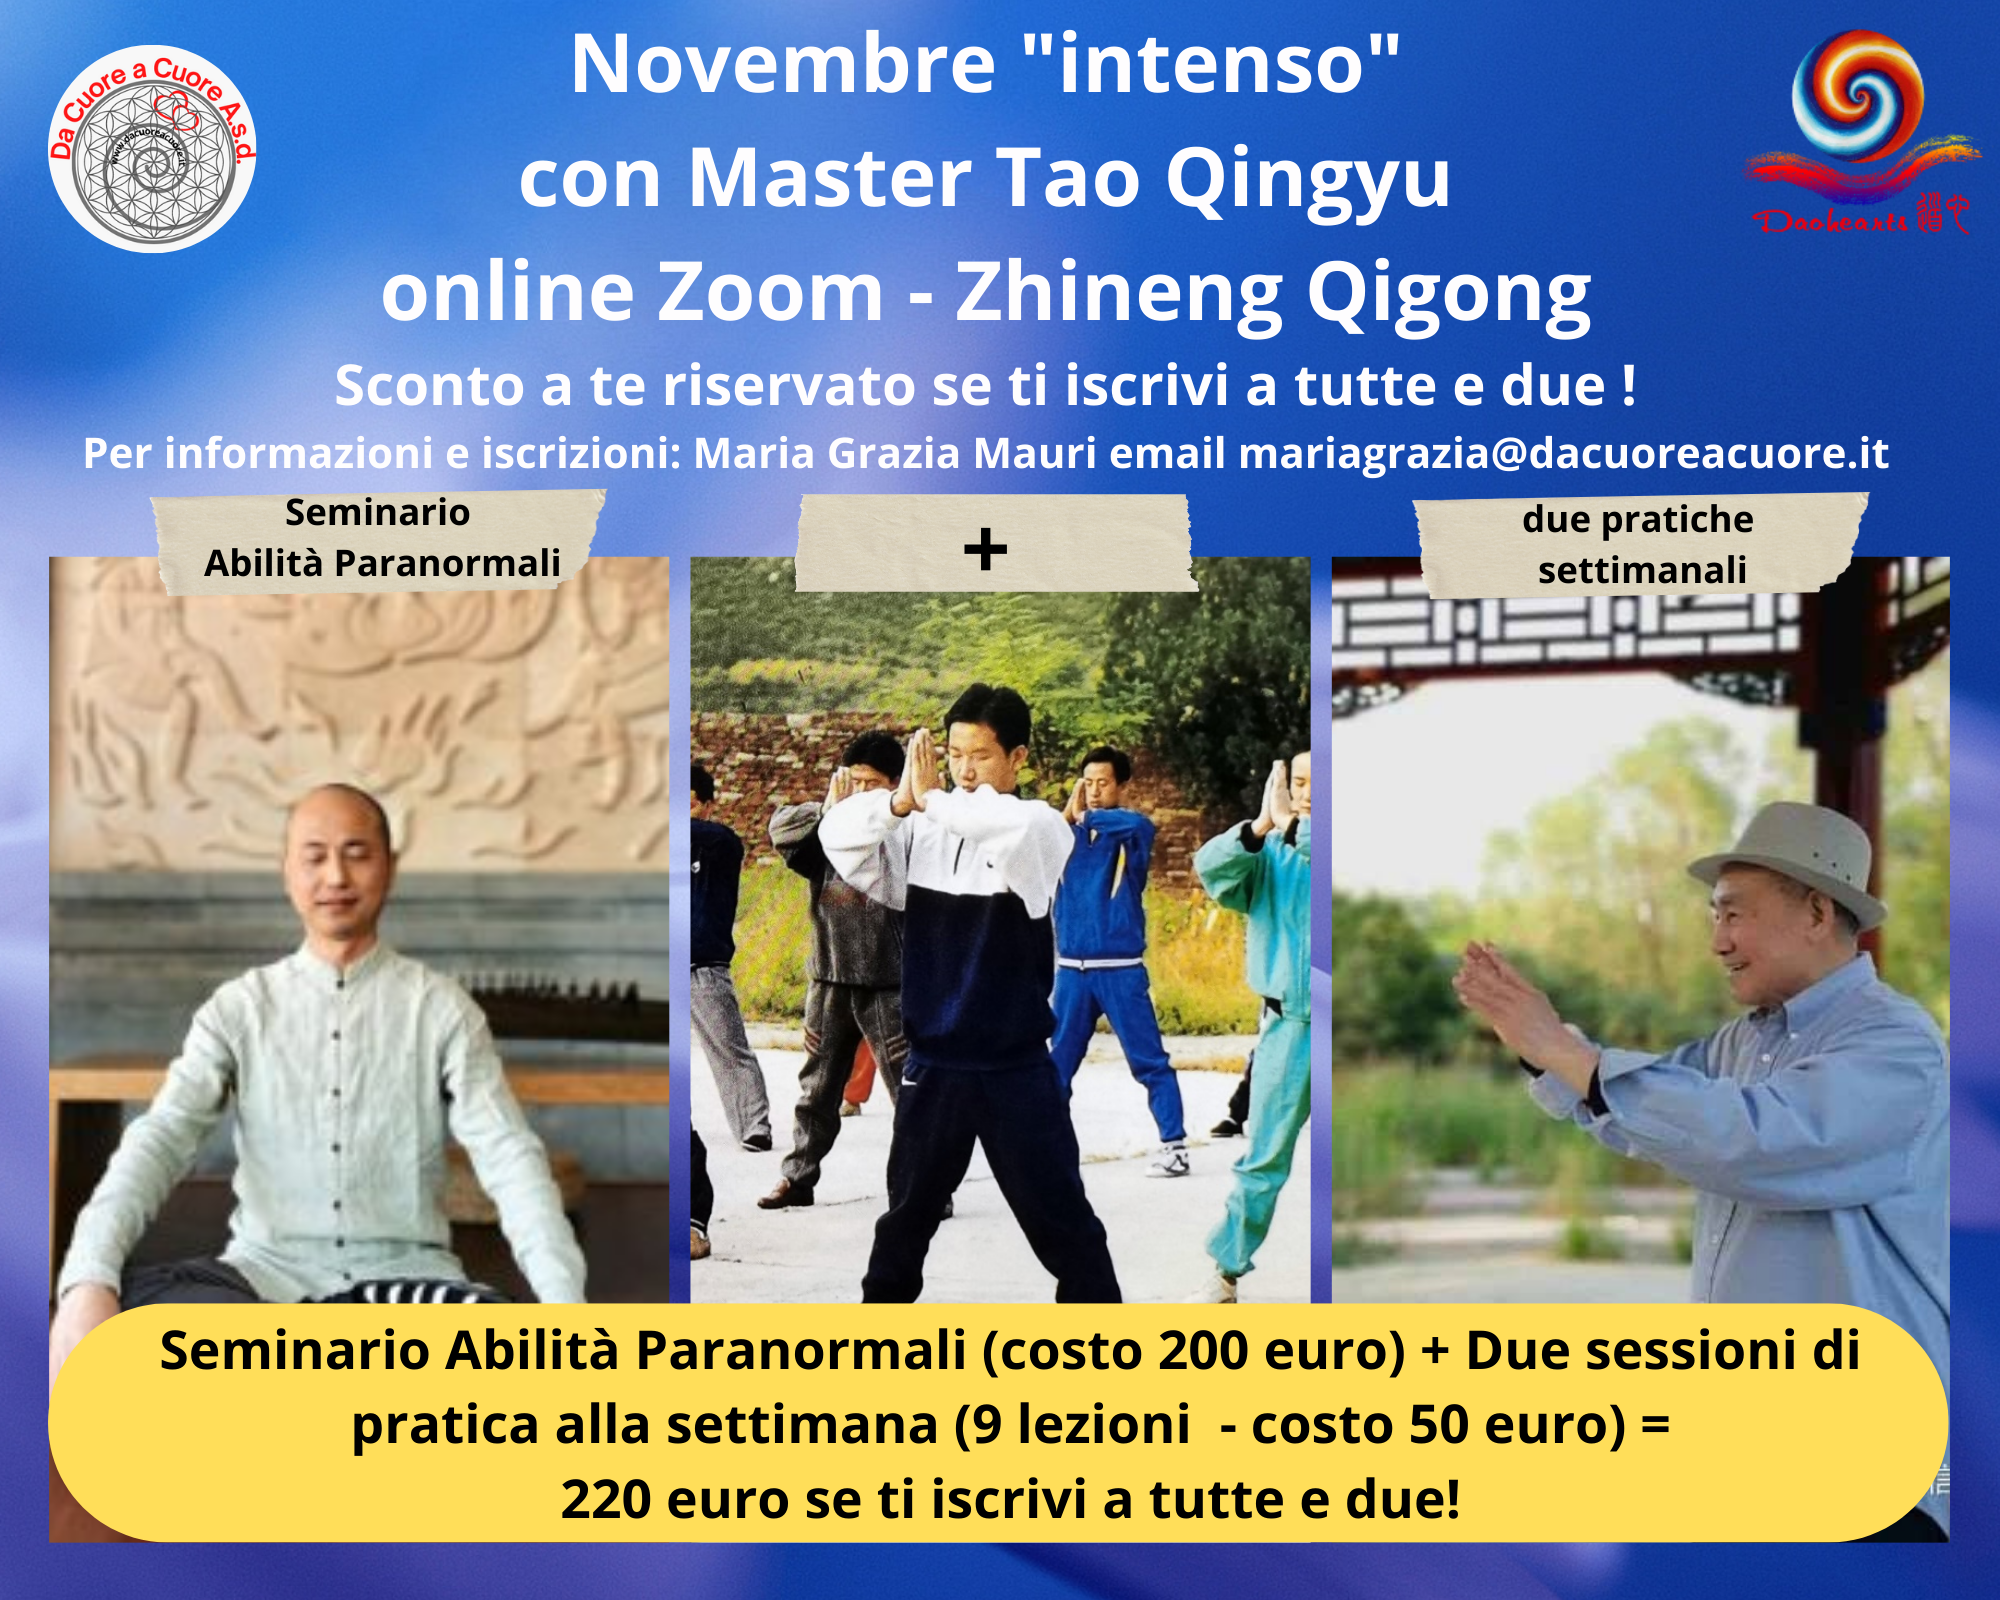 Novembre intenso online Zoom con Master Tao Qingyu e Zhineng Qigong 